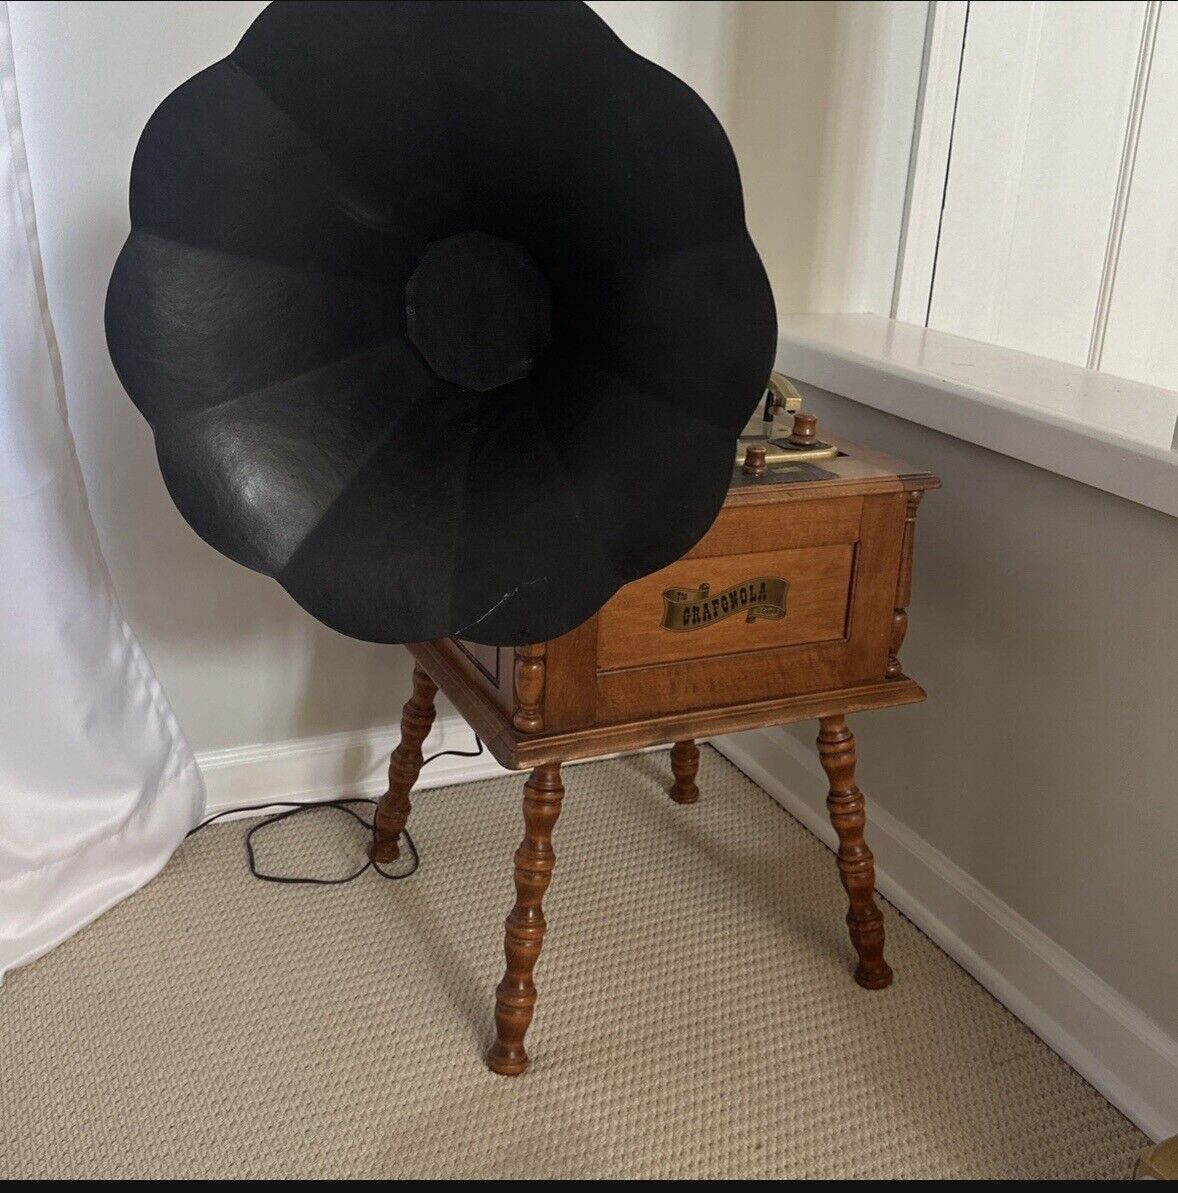 Vintage Grafonola 50s Tube Radio Record Player Working Condition With Gramophone